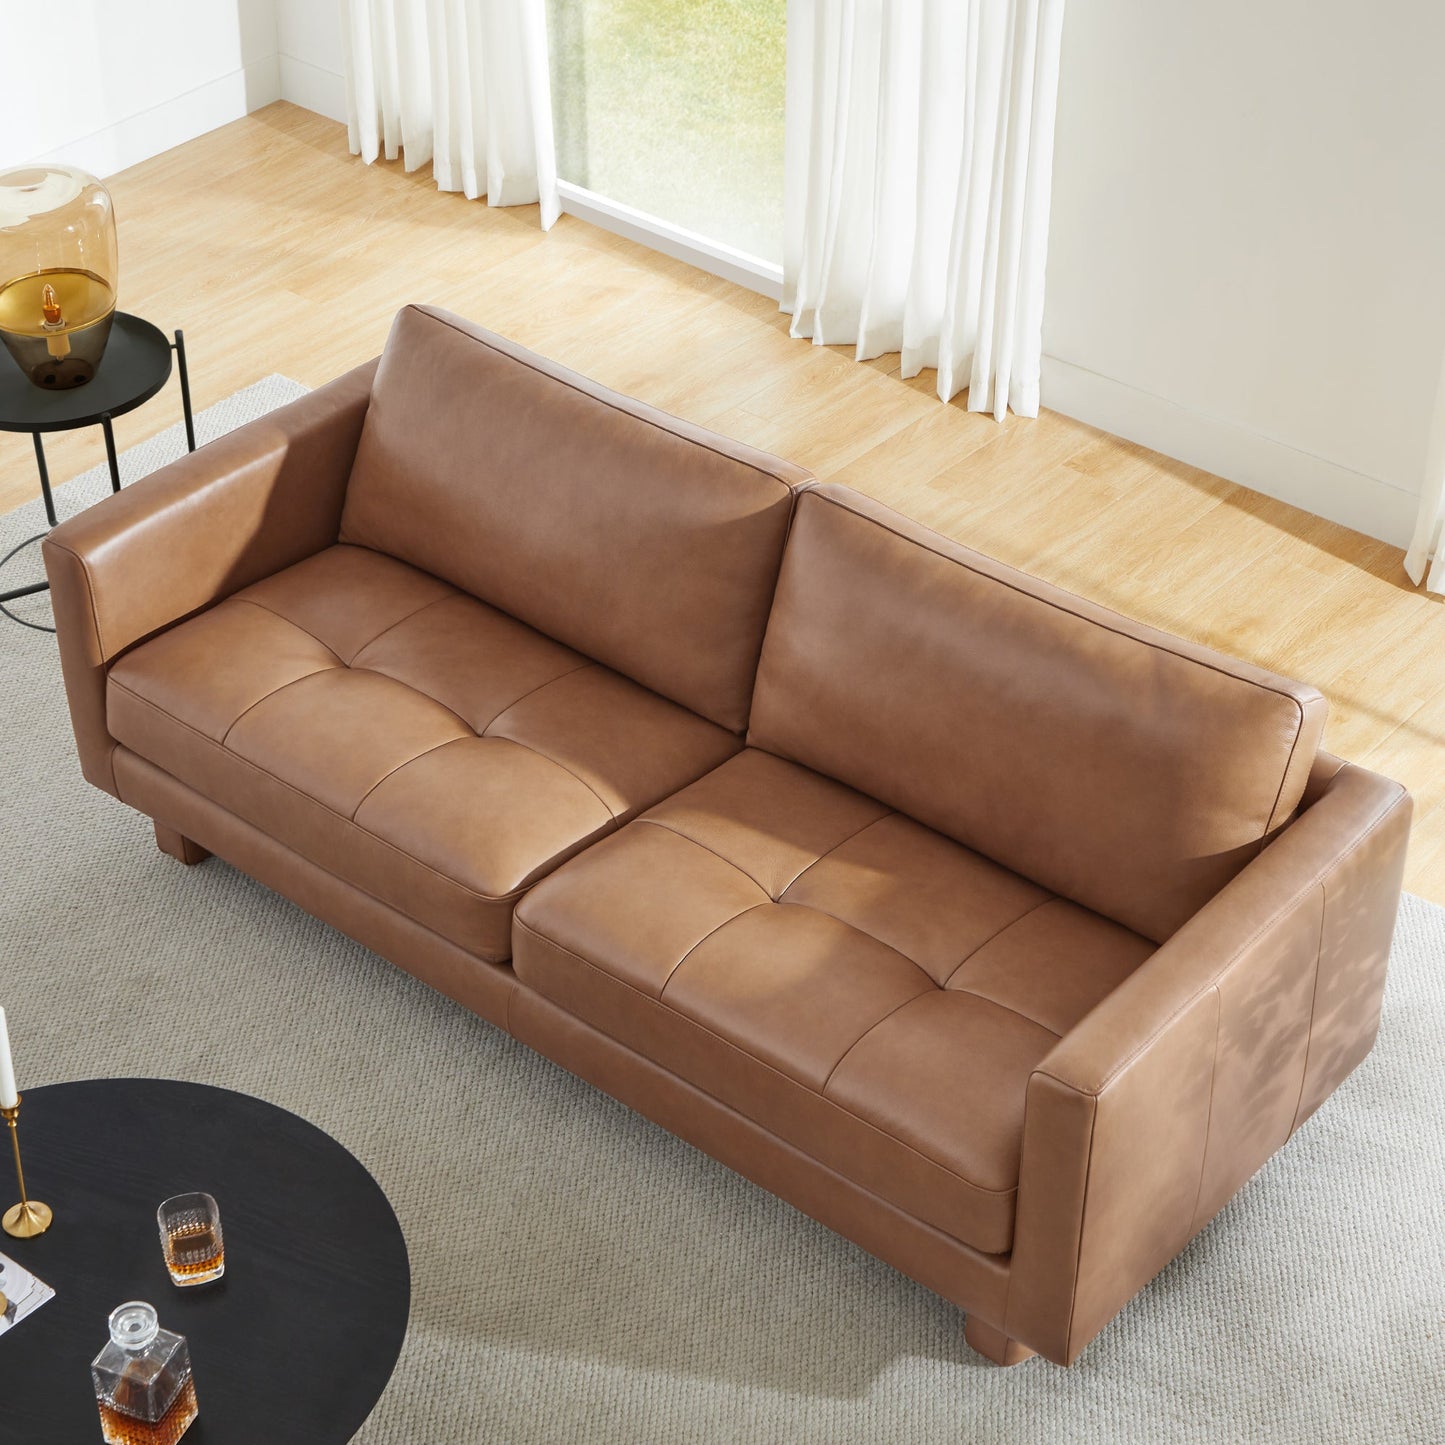 CHITA LIVING-Senan Mid-Century Modern Genunie Leather Sofa(84'')-Sofas-Genuine Top-grain Leather-Sofa with Leather Legs-